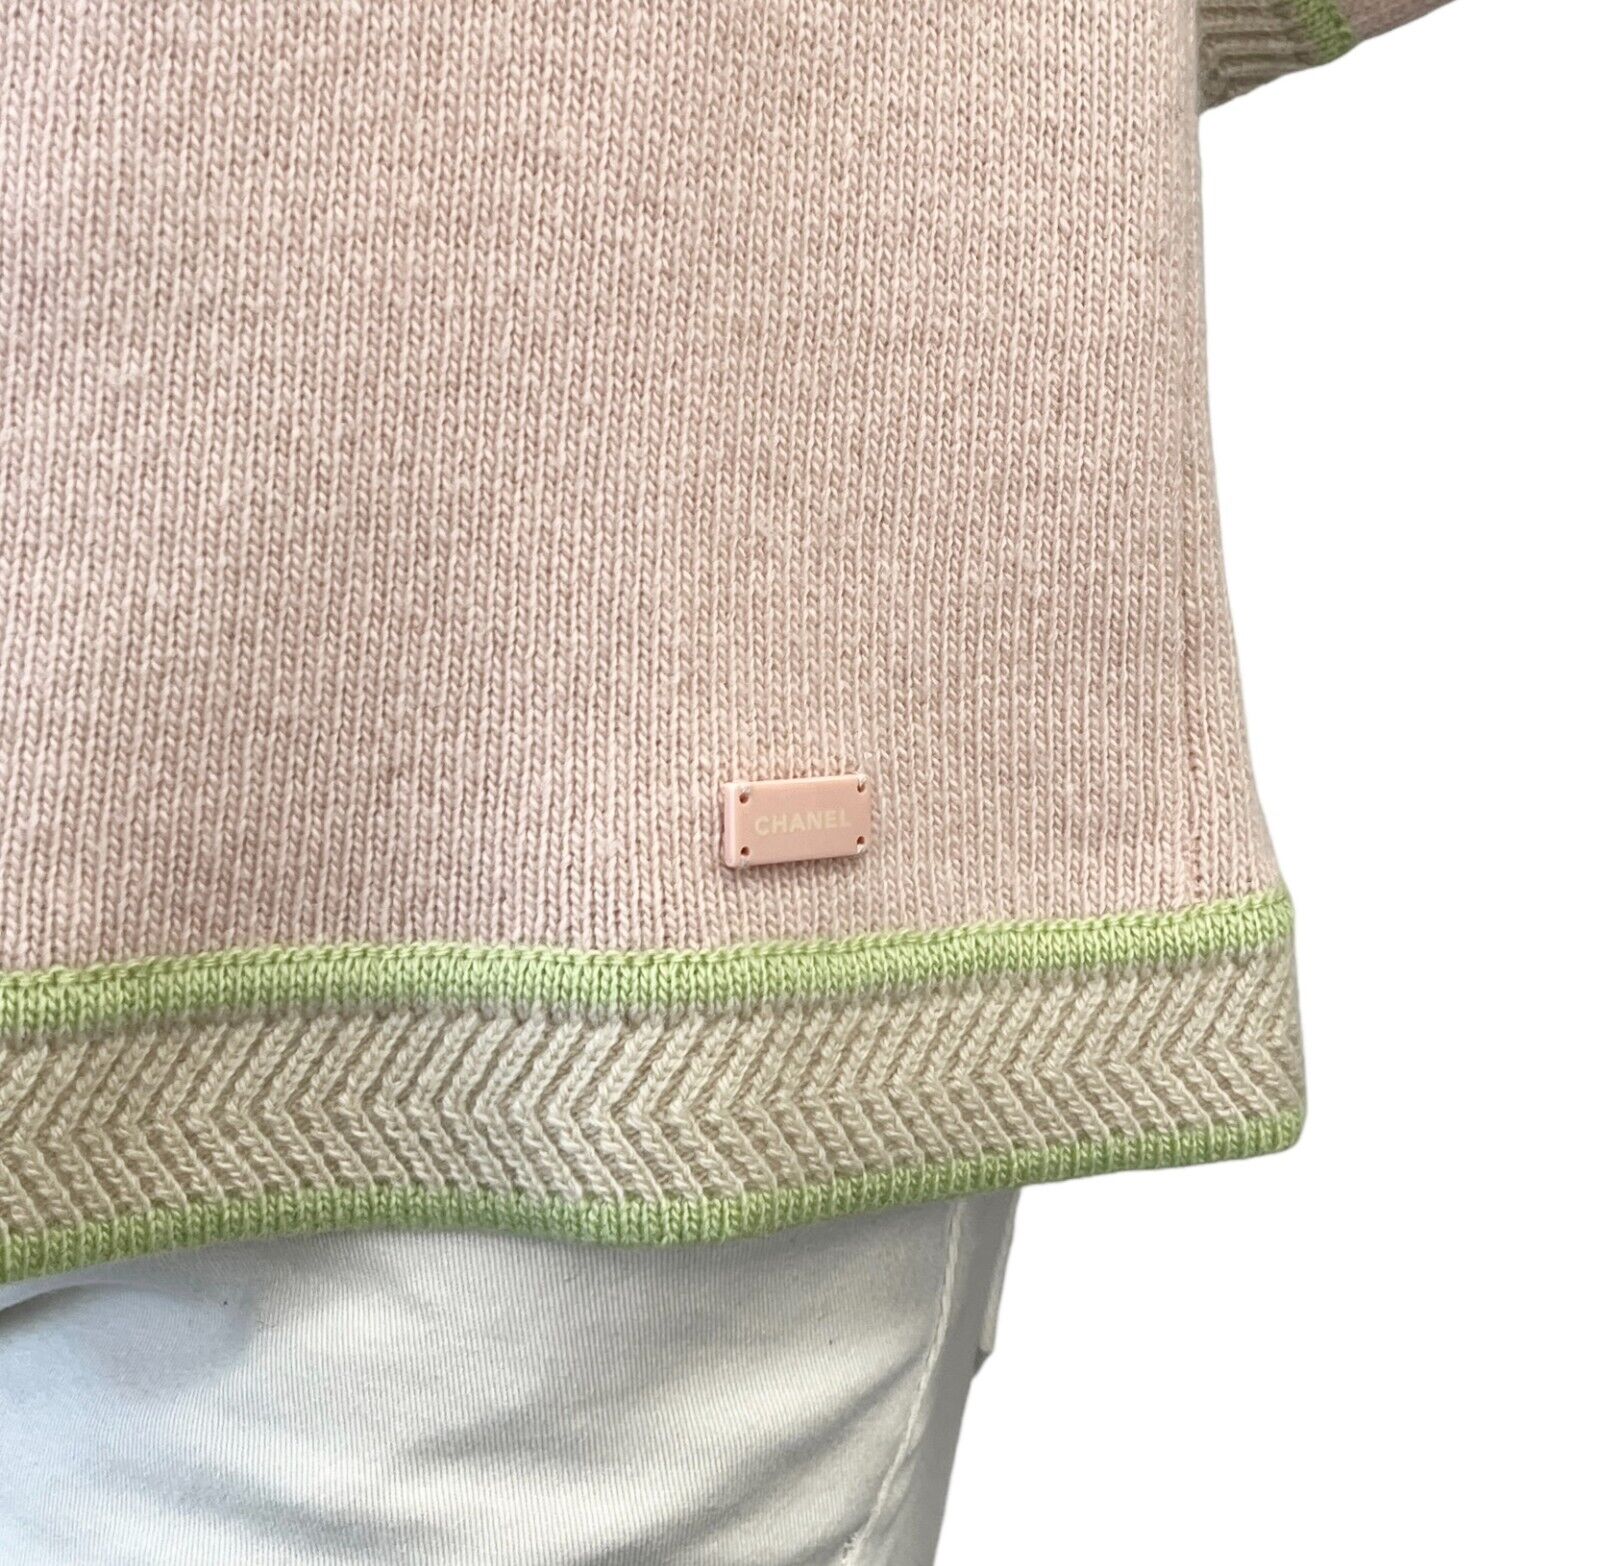 CHANEL Vintage 03P Logo Cardigan #42 Pink Green Sweater Cashmere Button RankAB+